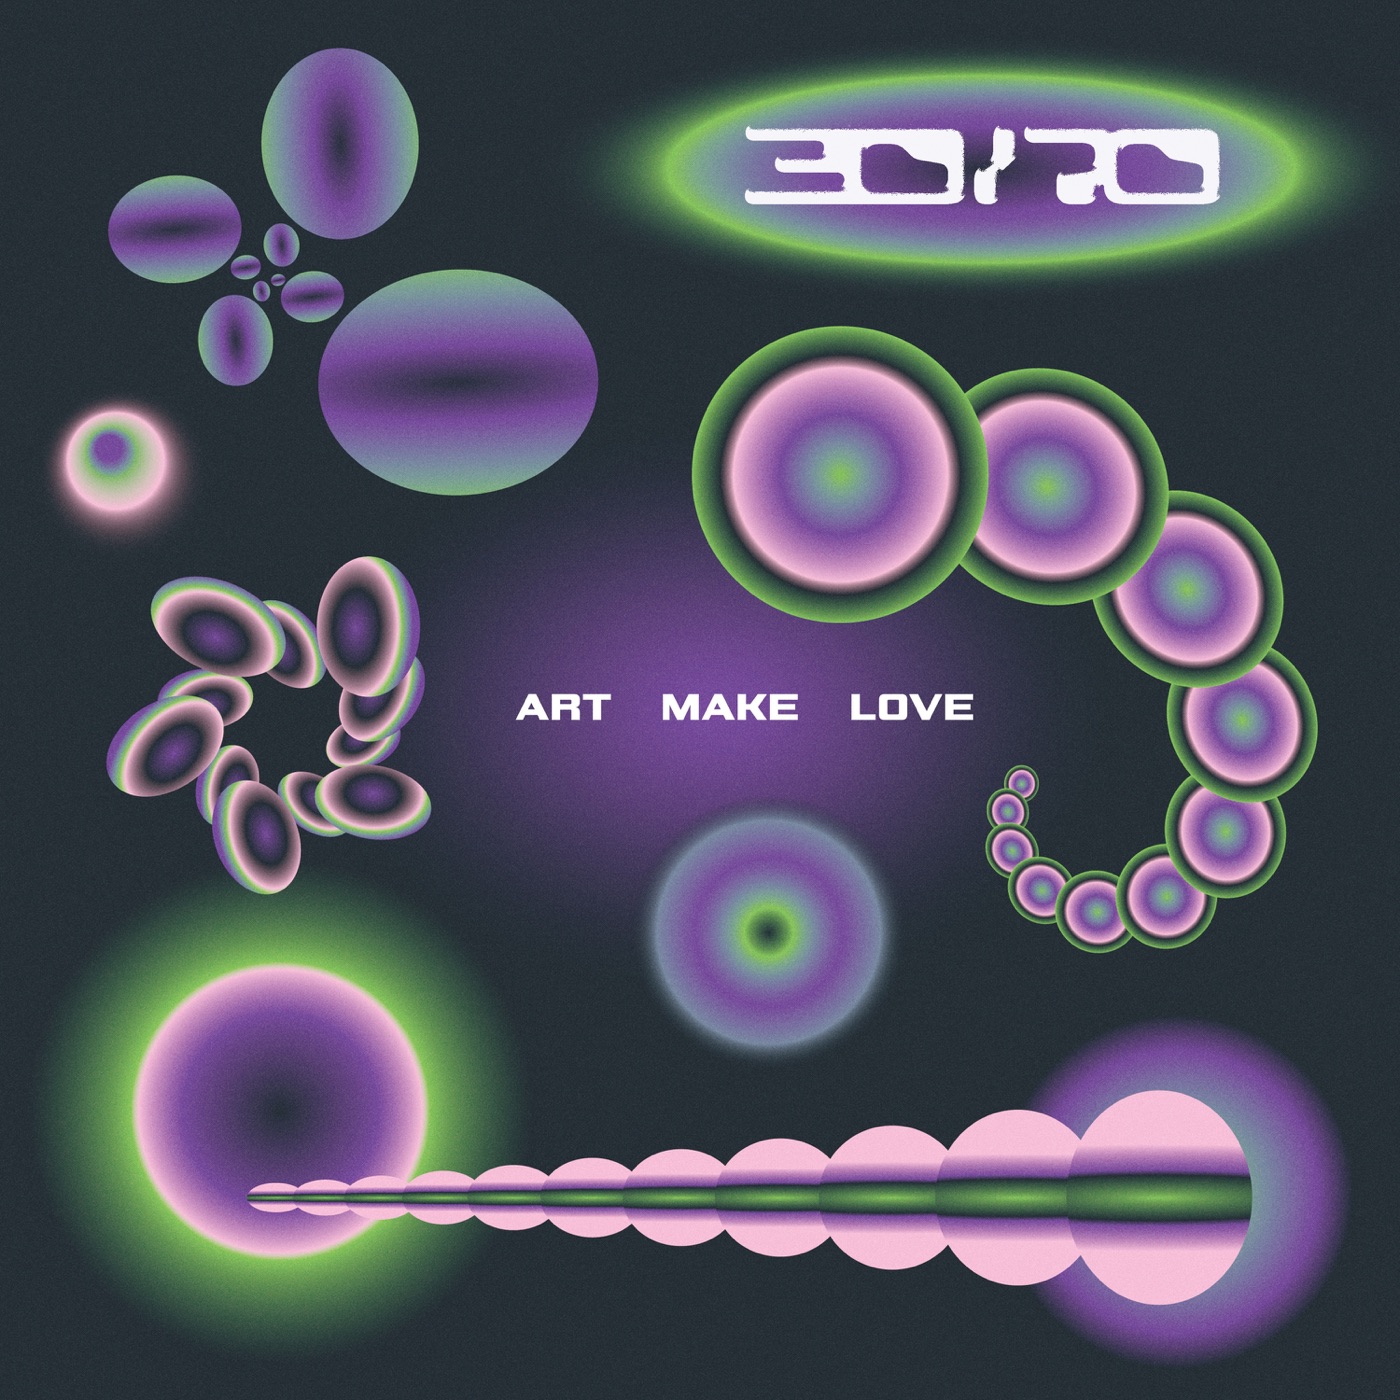 ART MAKE LOVE by 30/70